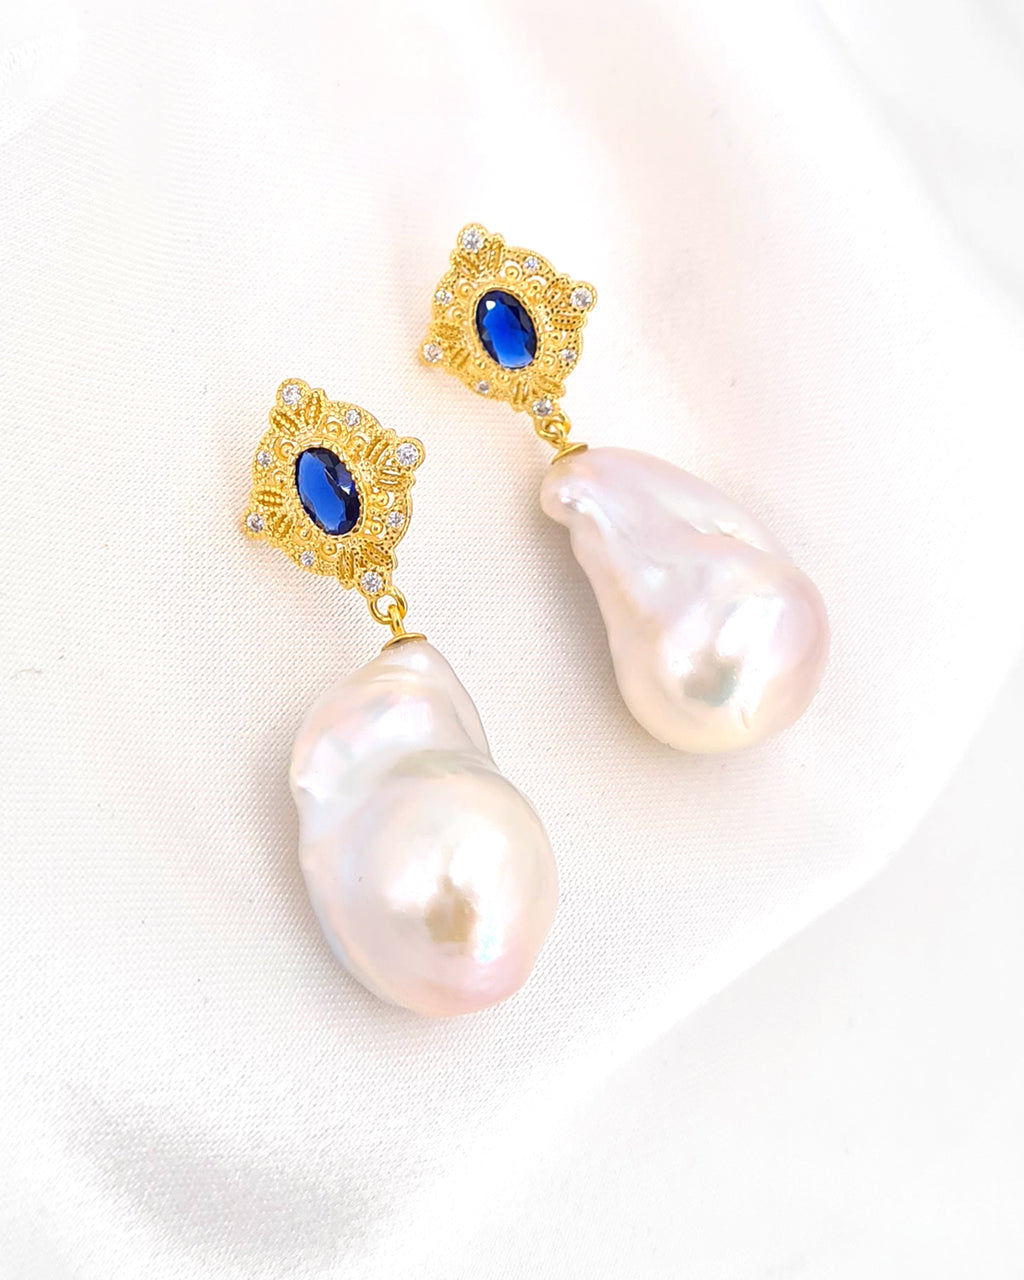 Large White Baroque Pearl Earrings - Vintage Style Gold Earrings | Wedding Statement Earrings